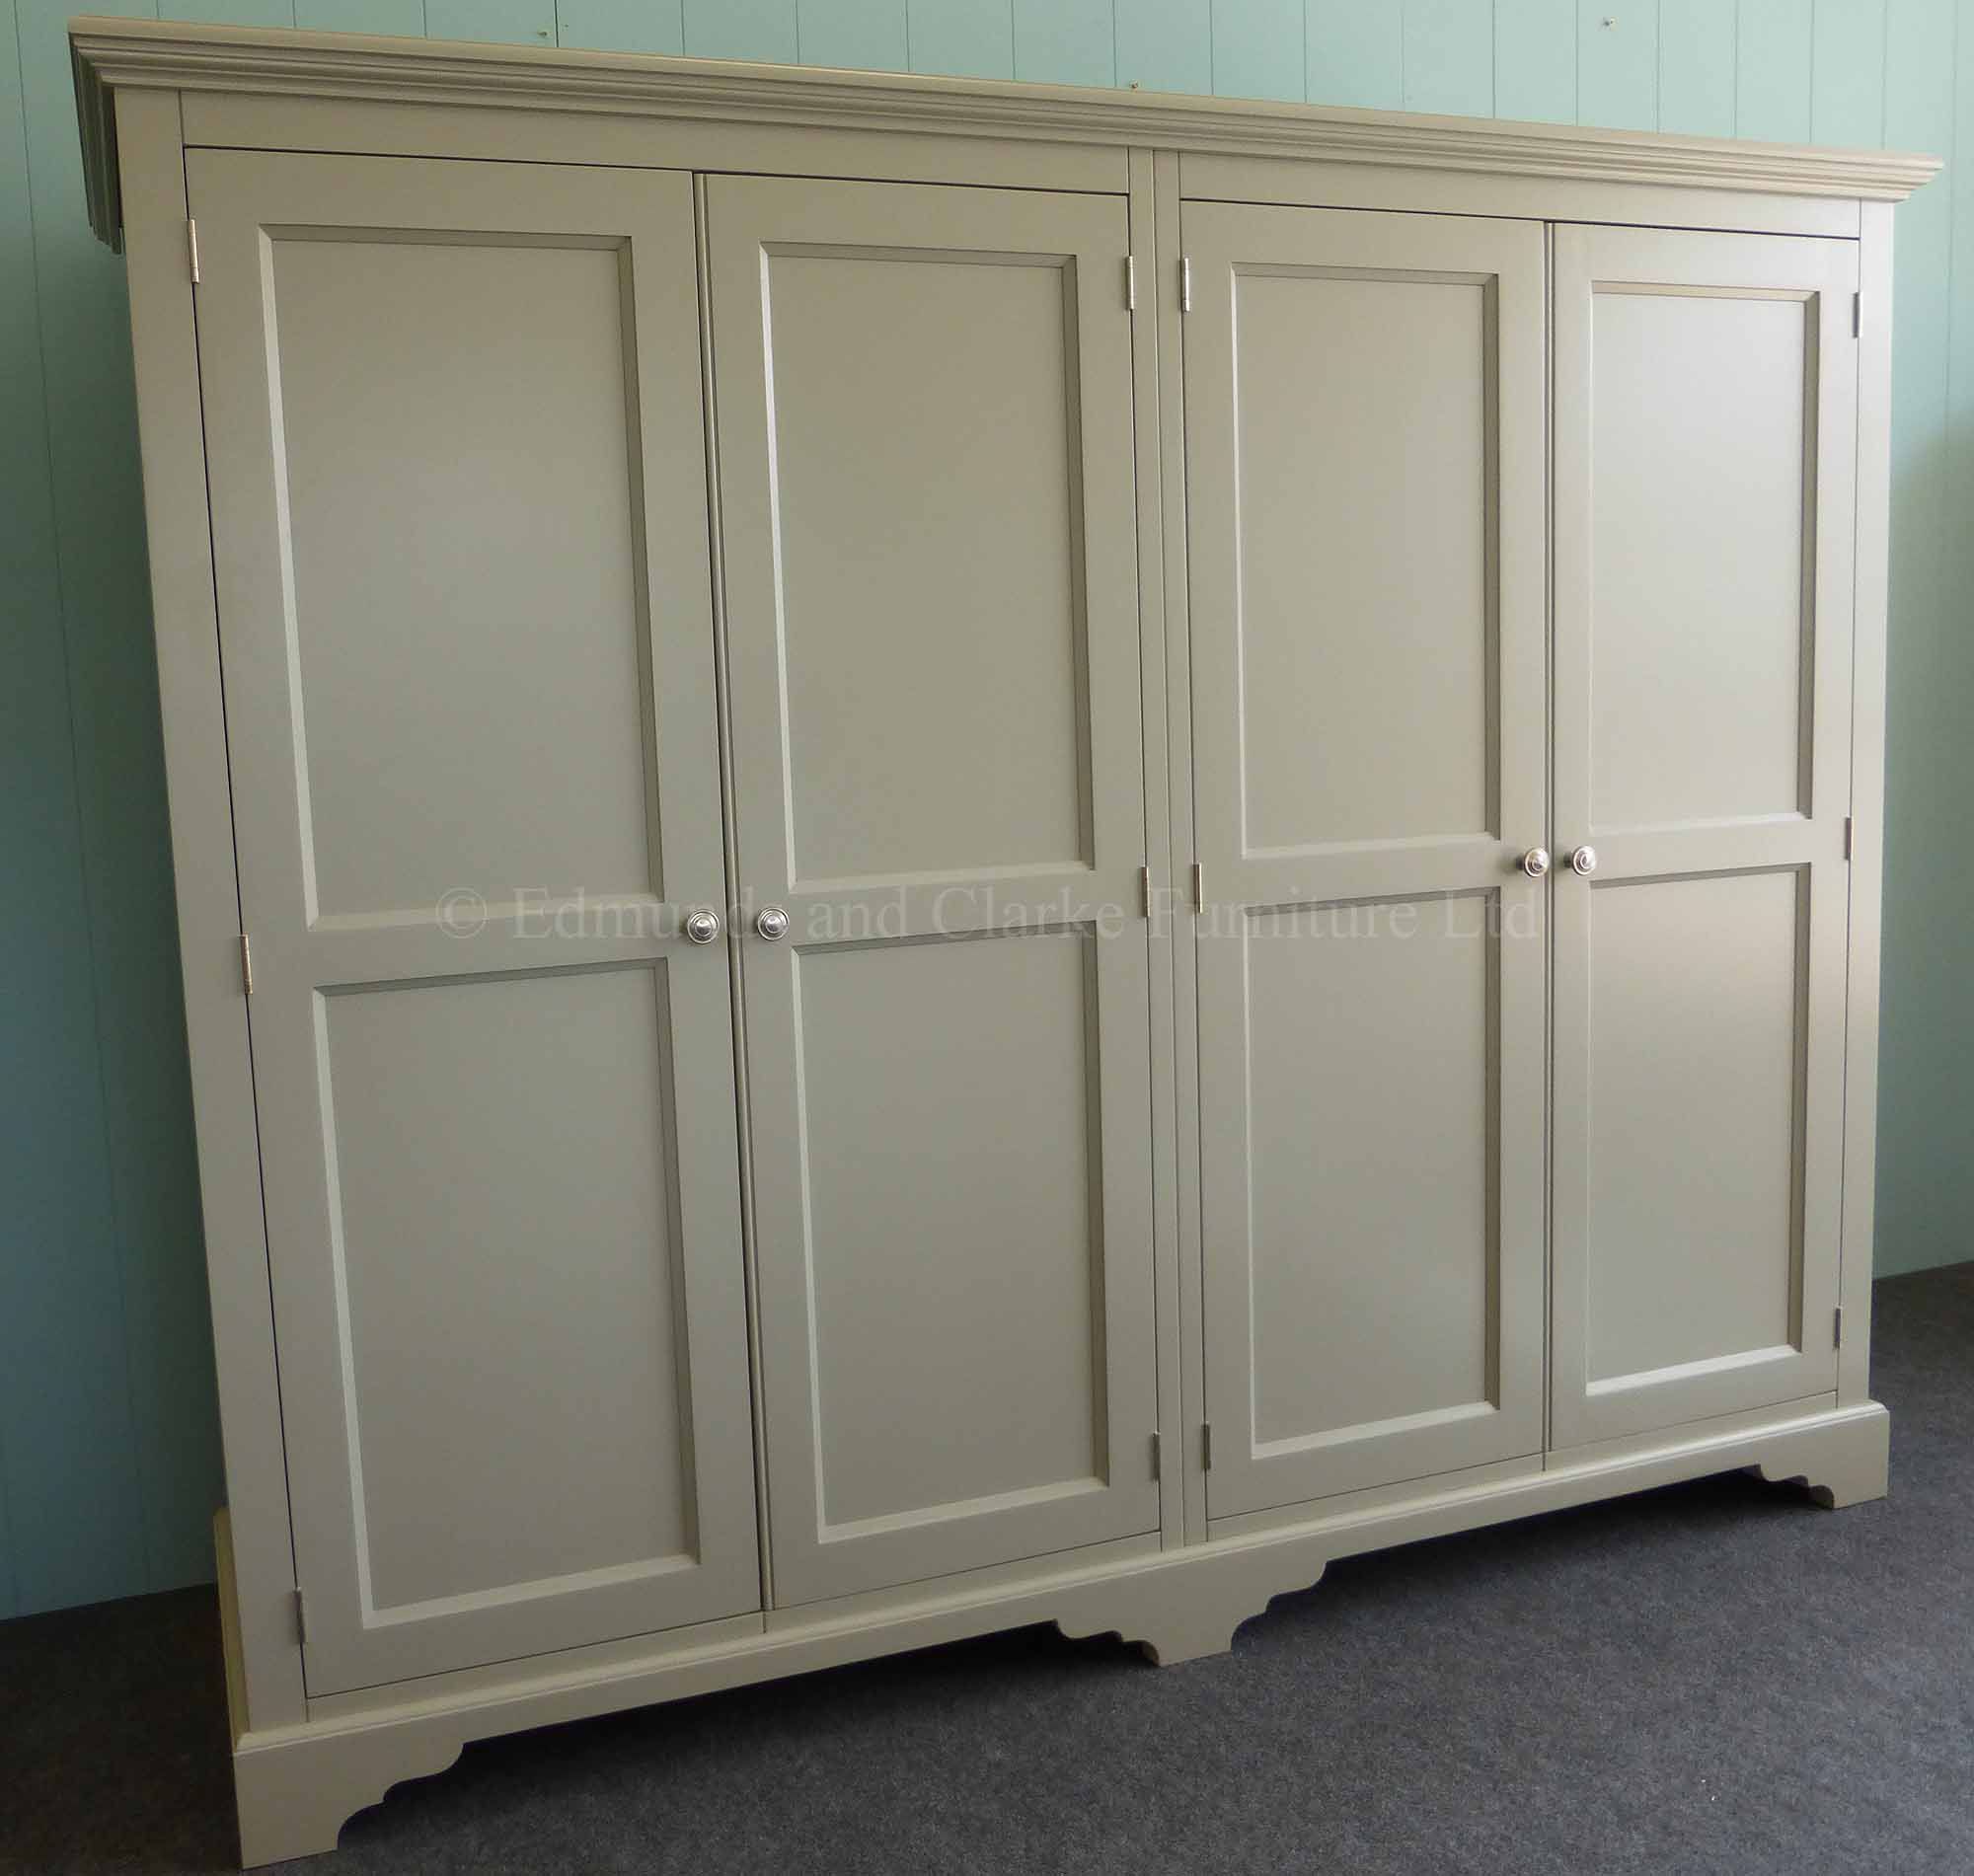 Bespoke Painted Low Eves 4 Door Wardrobe | Edmunds & Clarke Ltd In Wardrobes With 4 Doors (View 15 of 15)